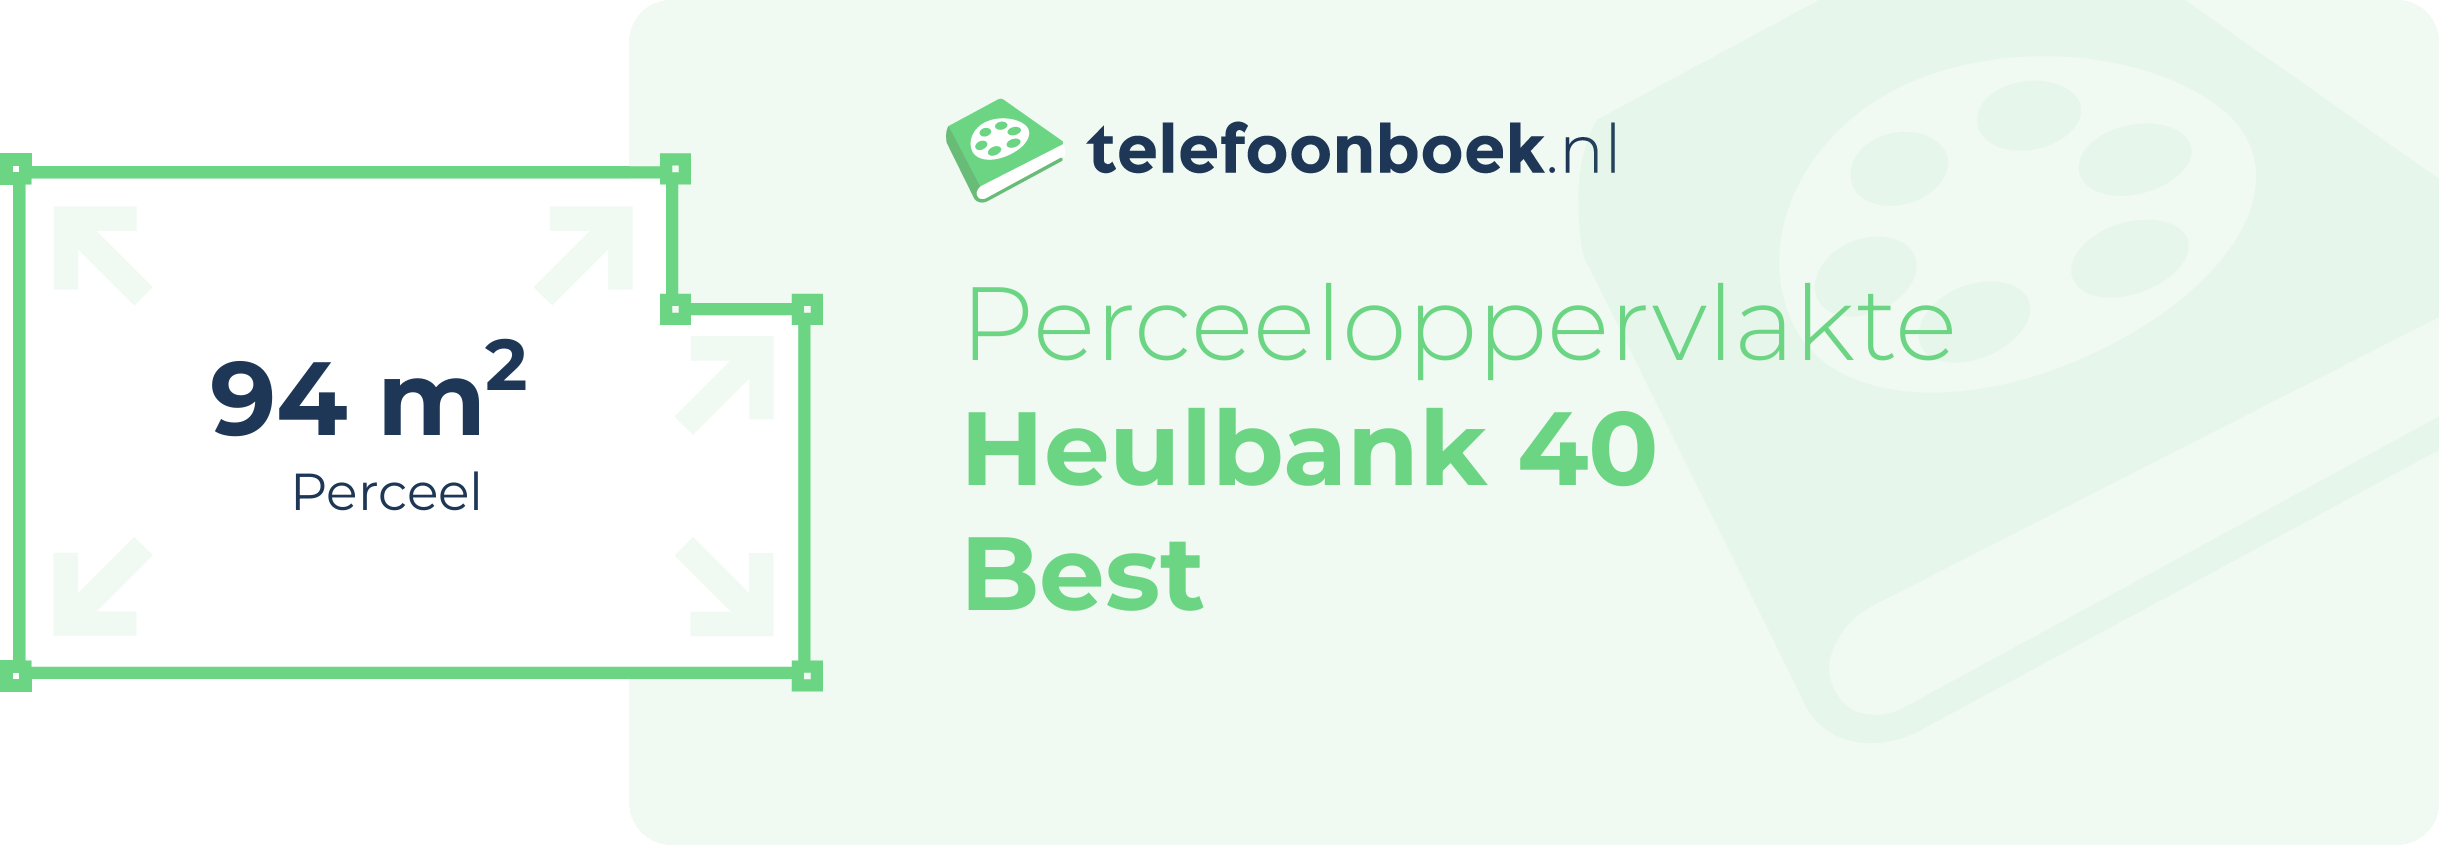 Perceeloppervlakte Heulbank 40 Best